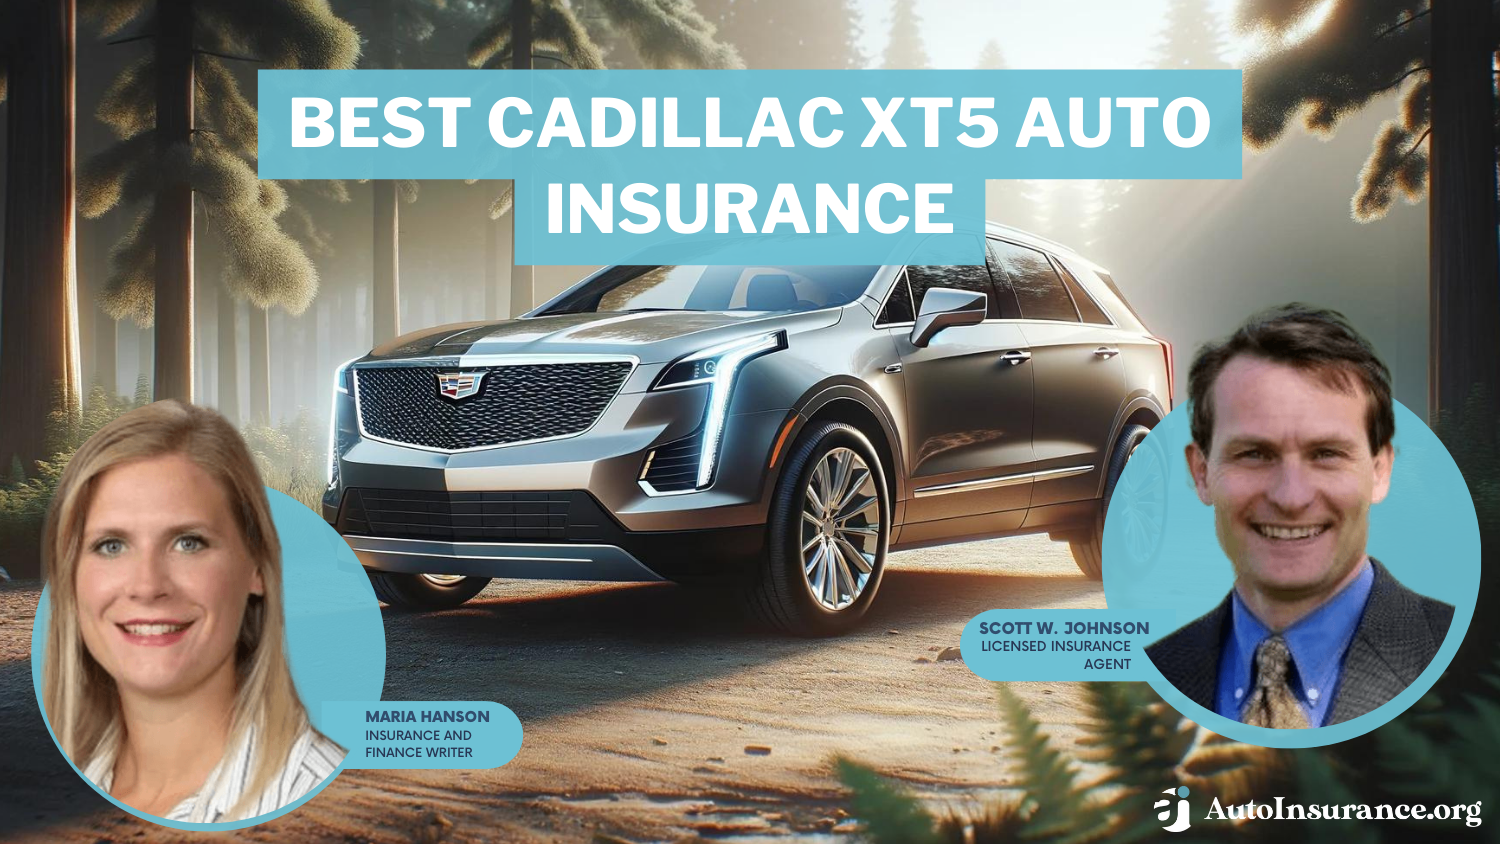 Best Cadillac XT5 Auto Insurance: State Farm, Progressive, Geico